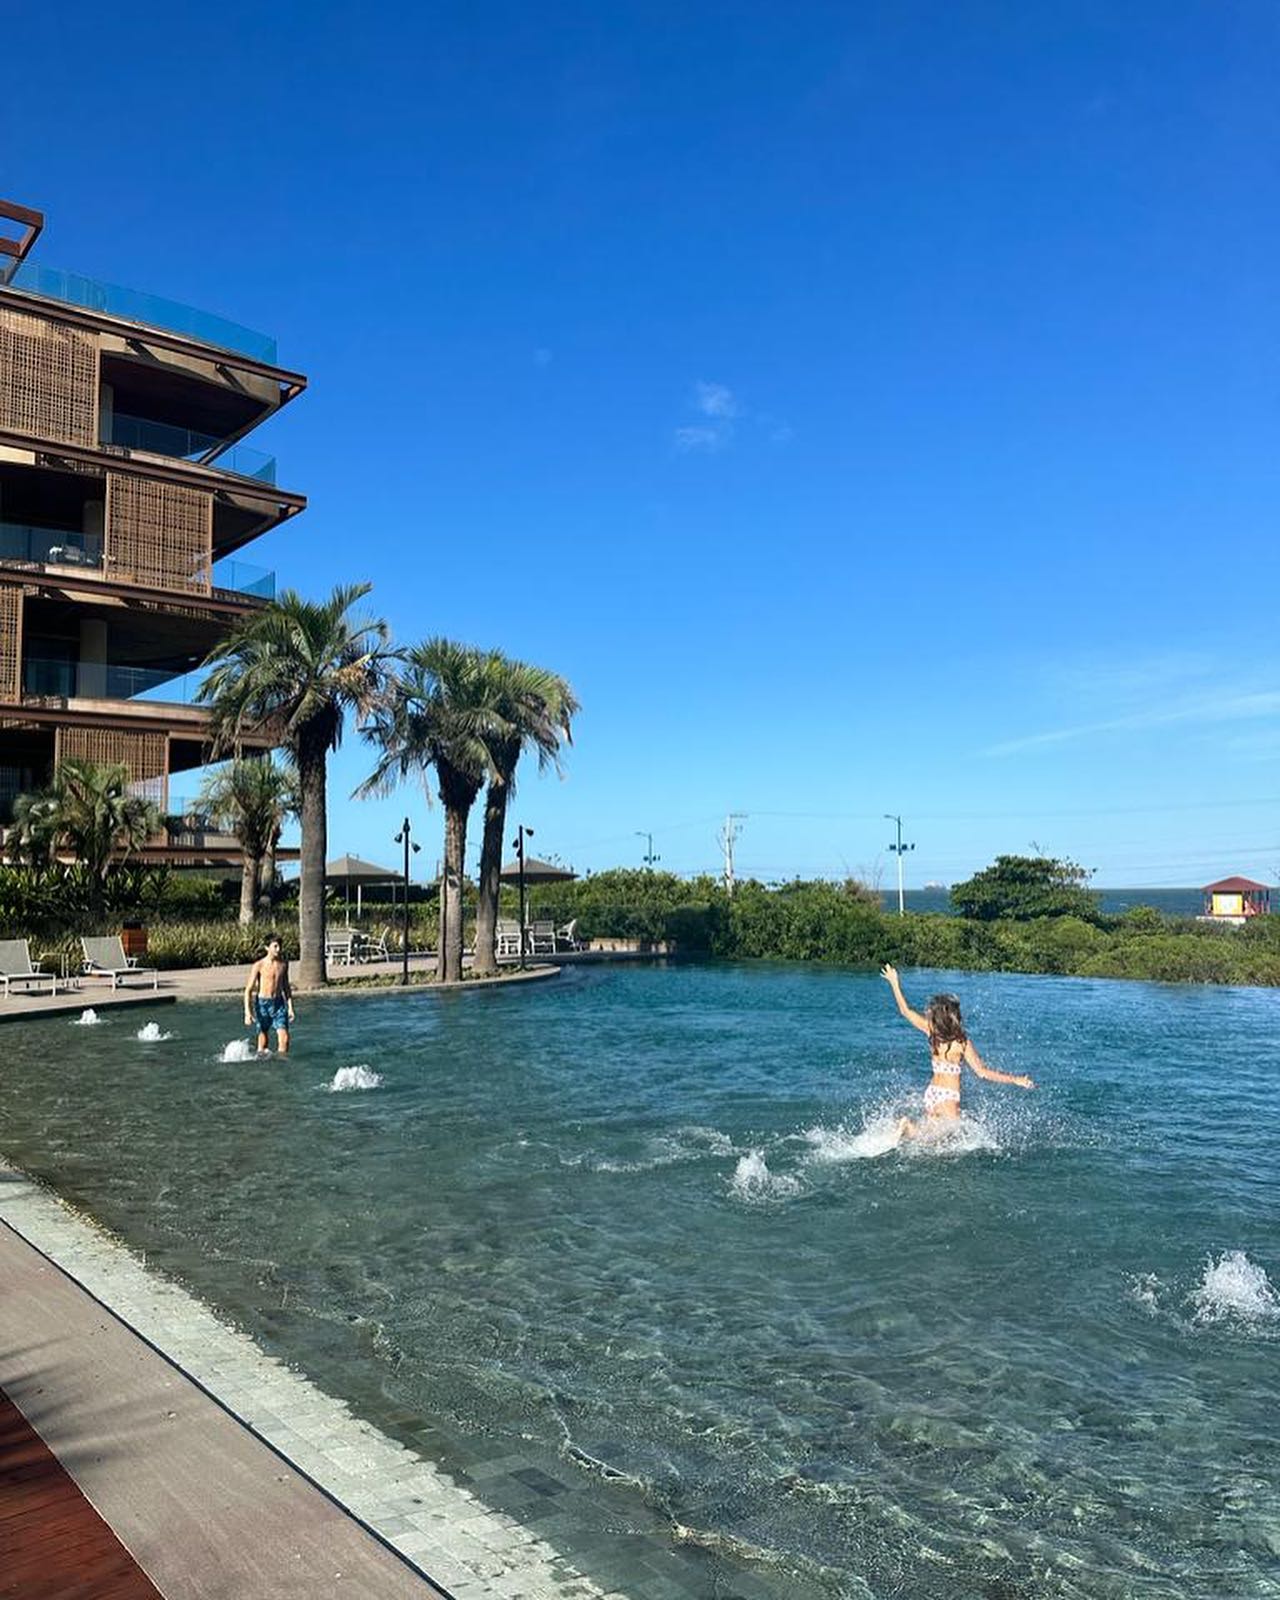 Vivian Lake se diverte na piscina em Santa Catarina Reprodução/Instagram 18.12.2022